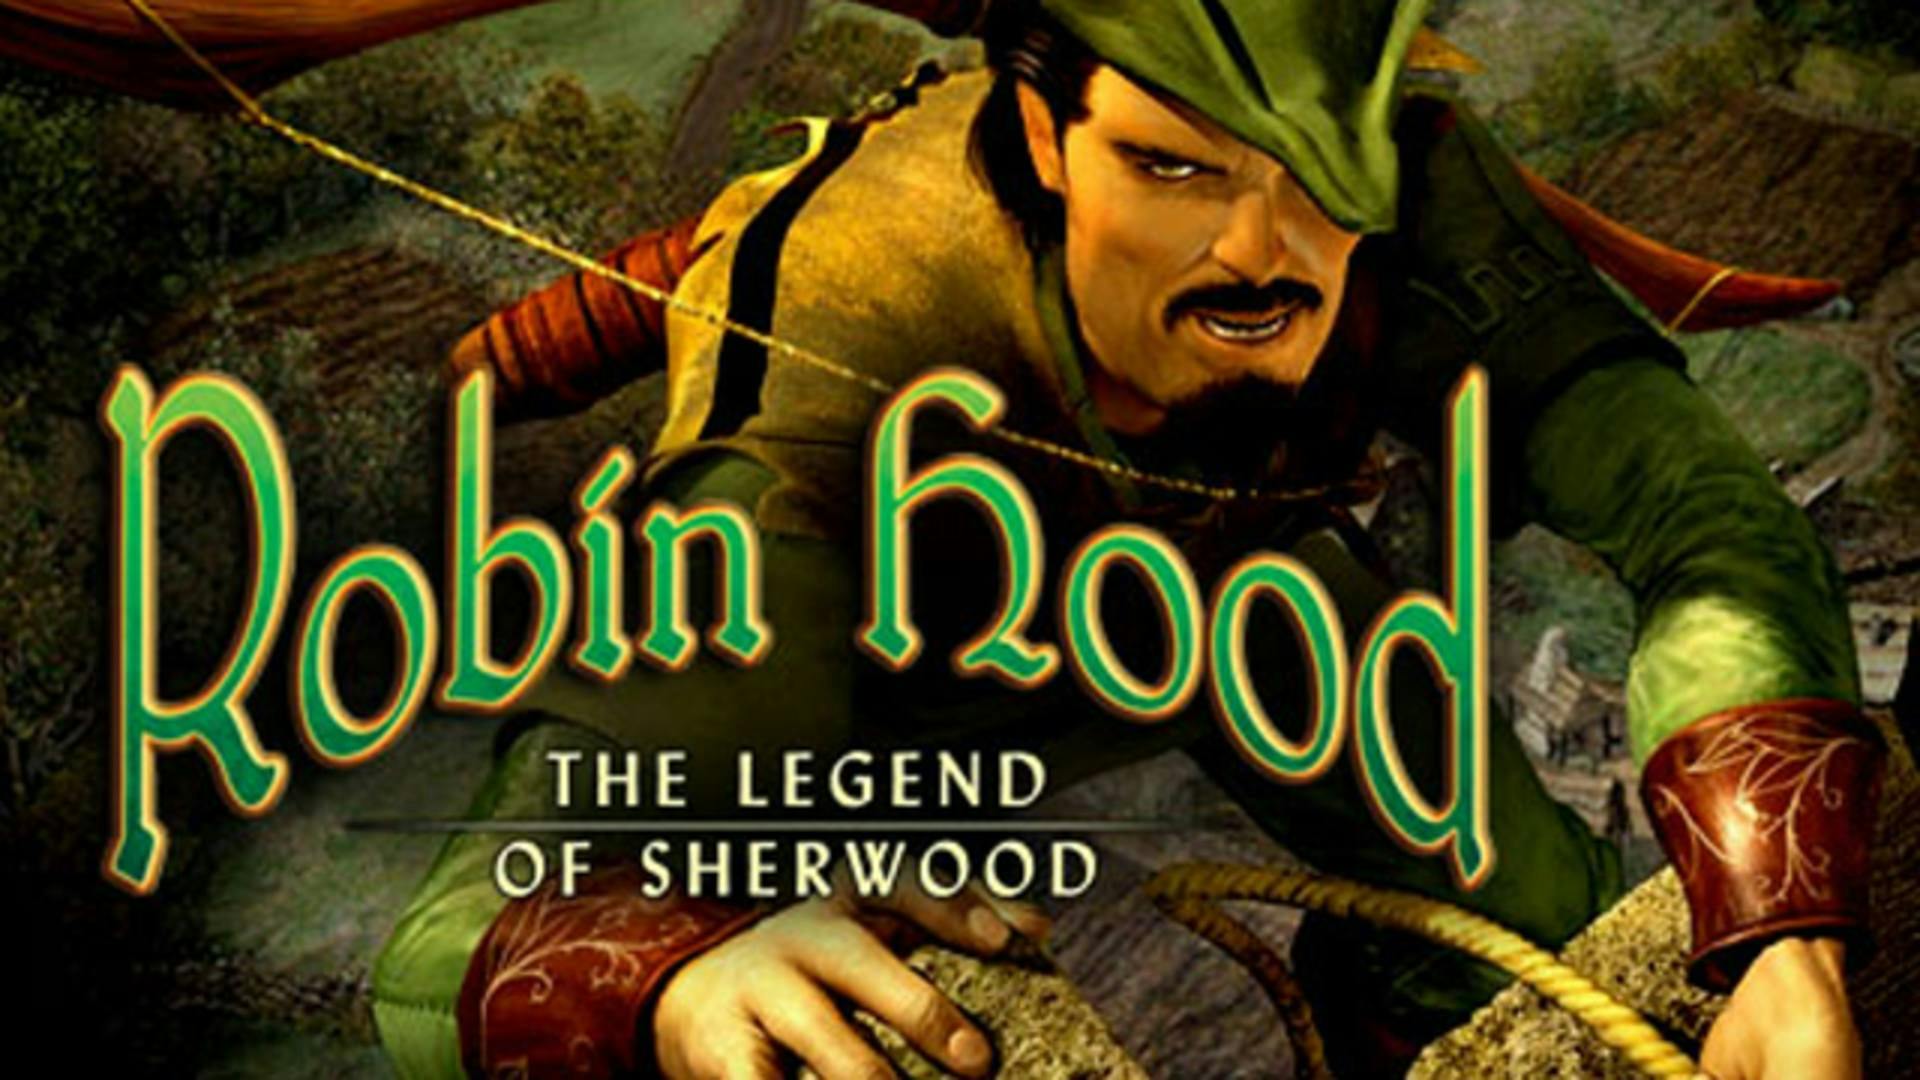 Robin Hood The Legend of Sherwood Steam PC Game